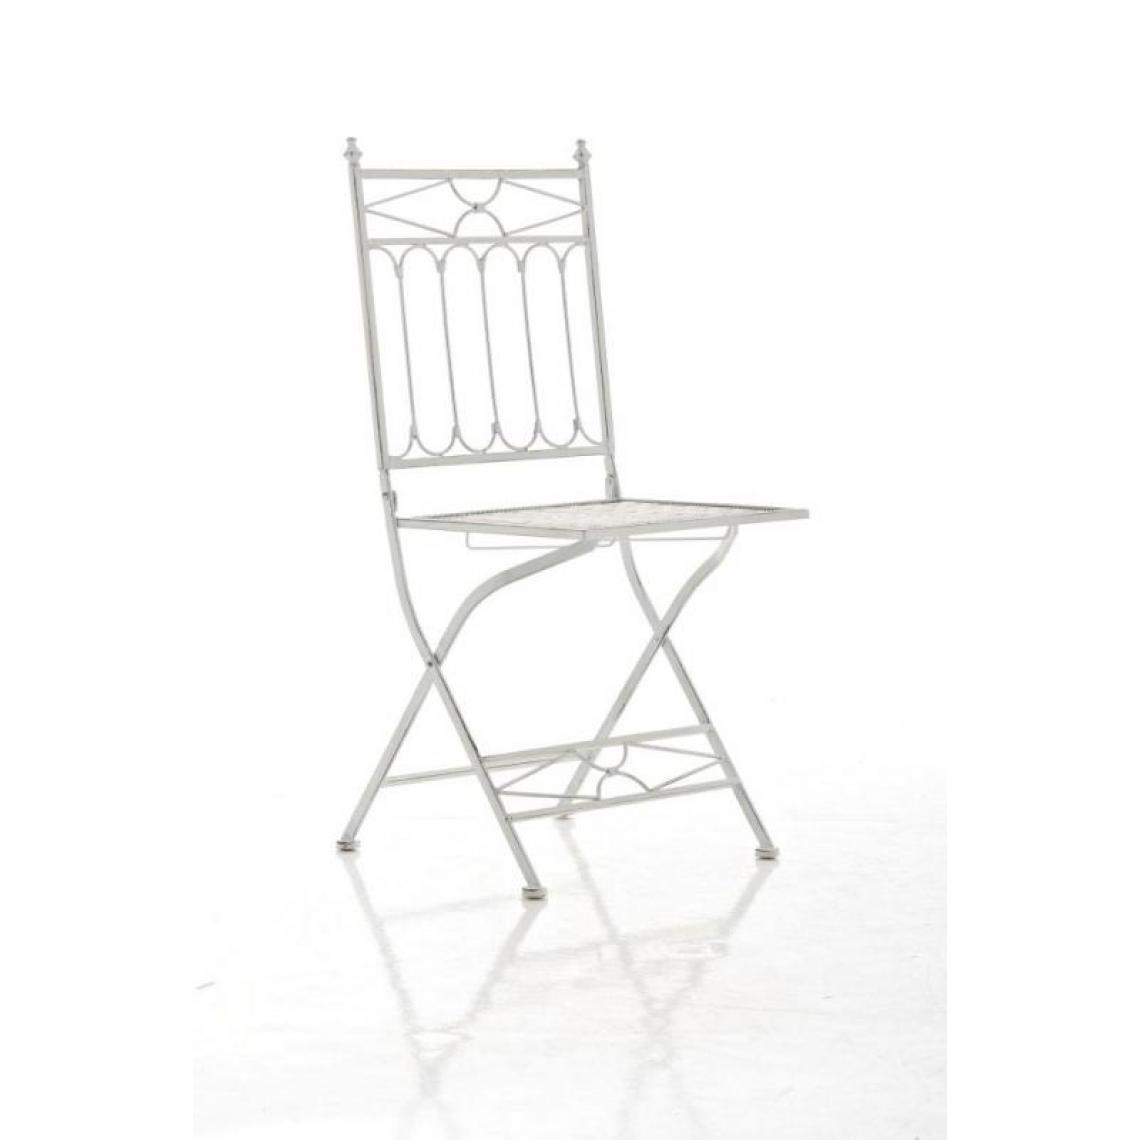 Icaverne - Superbe Chaise pliante edition Ottawa couleur blanc antique - Chaises